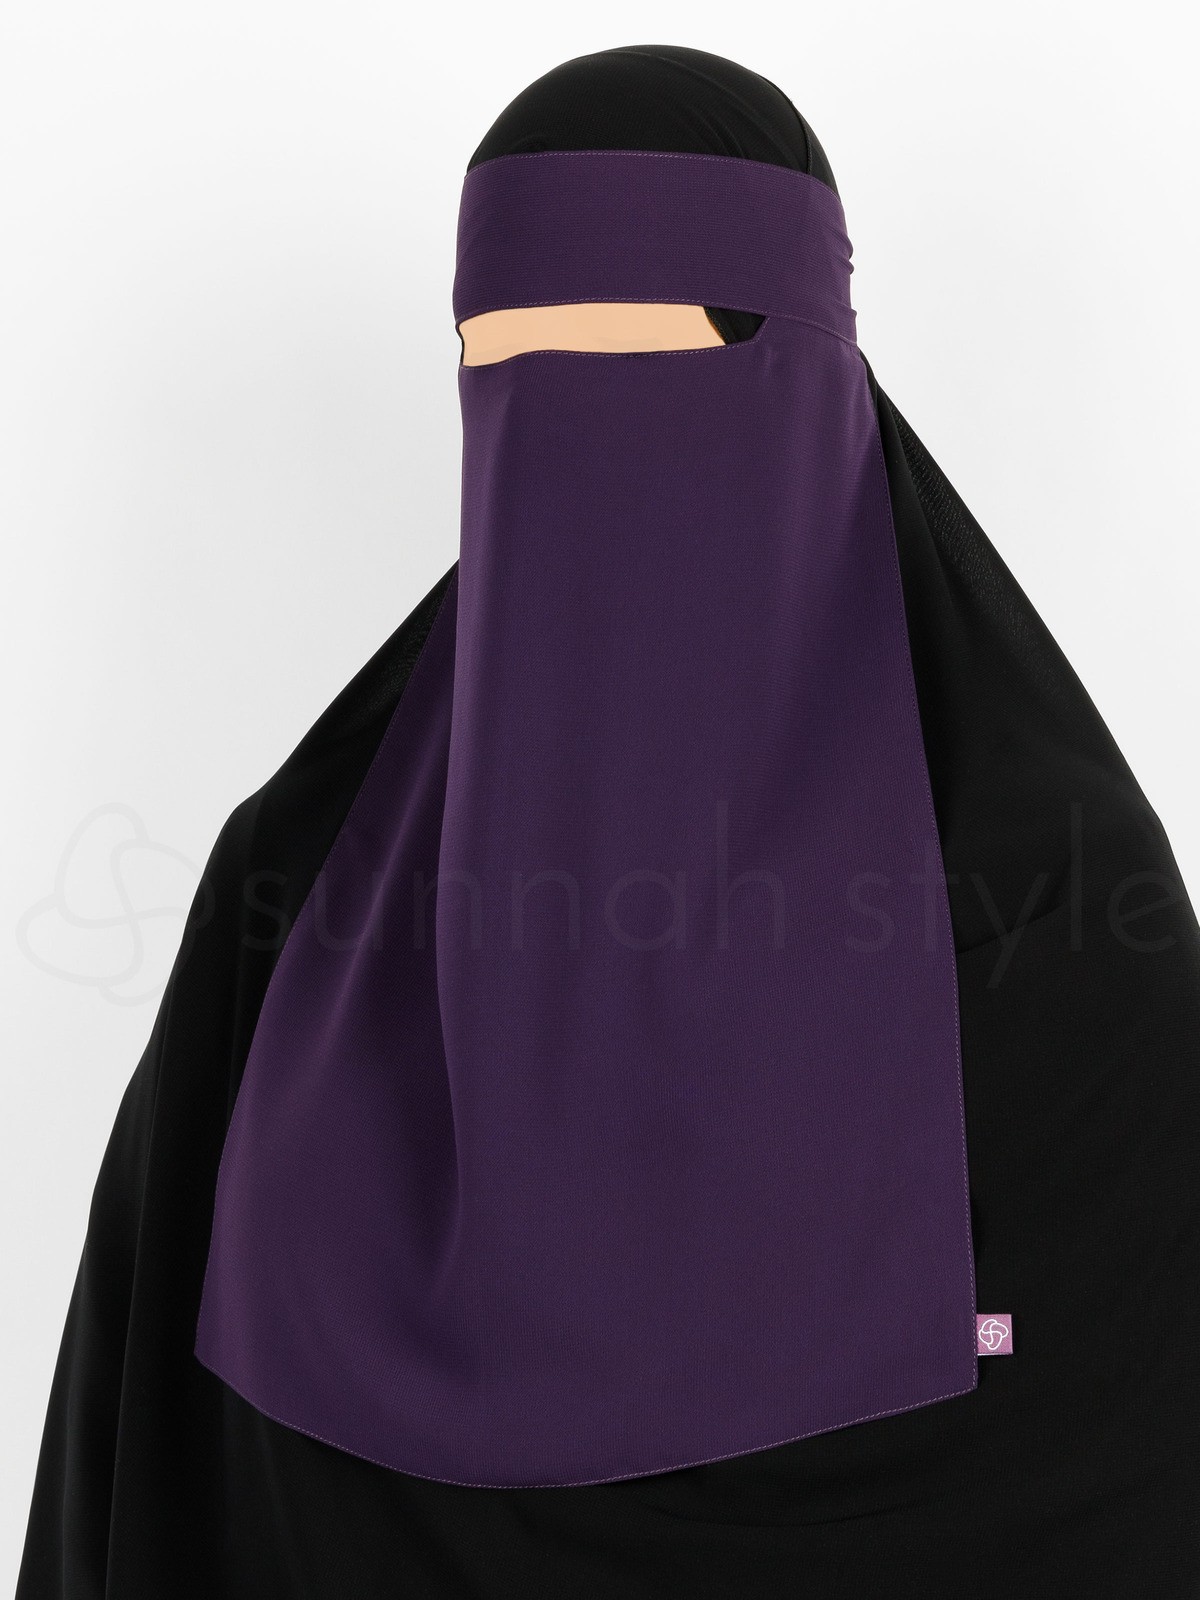 Sunnah Style - Narrow No-Pinch One Layer Niqab (Violet)